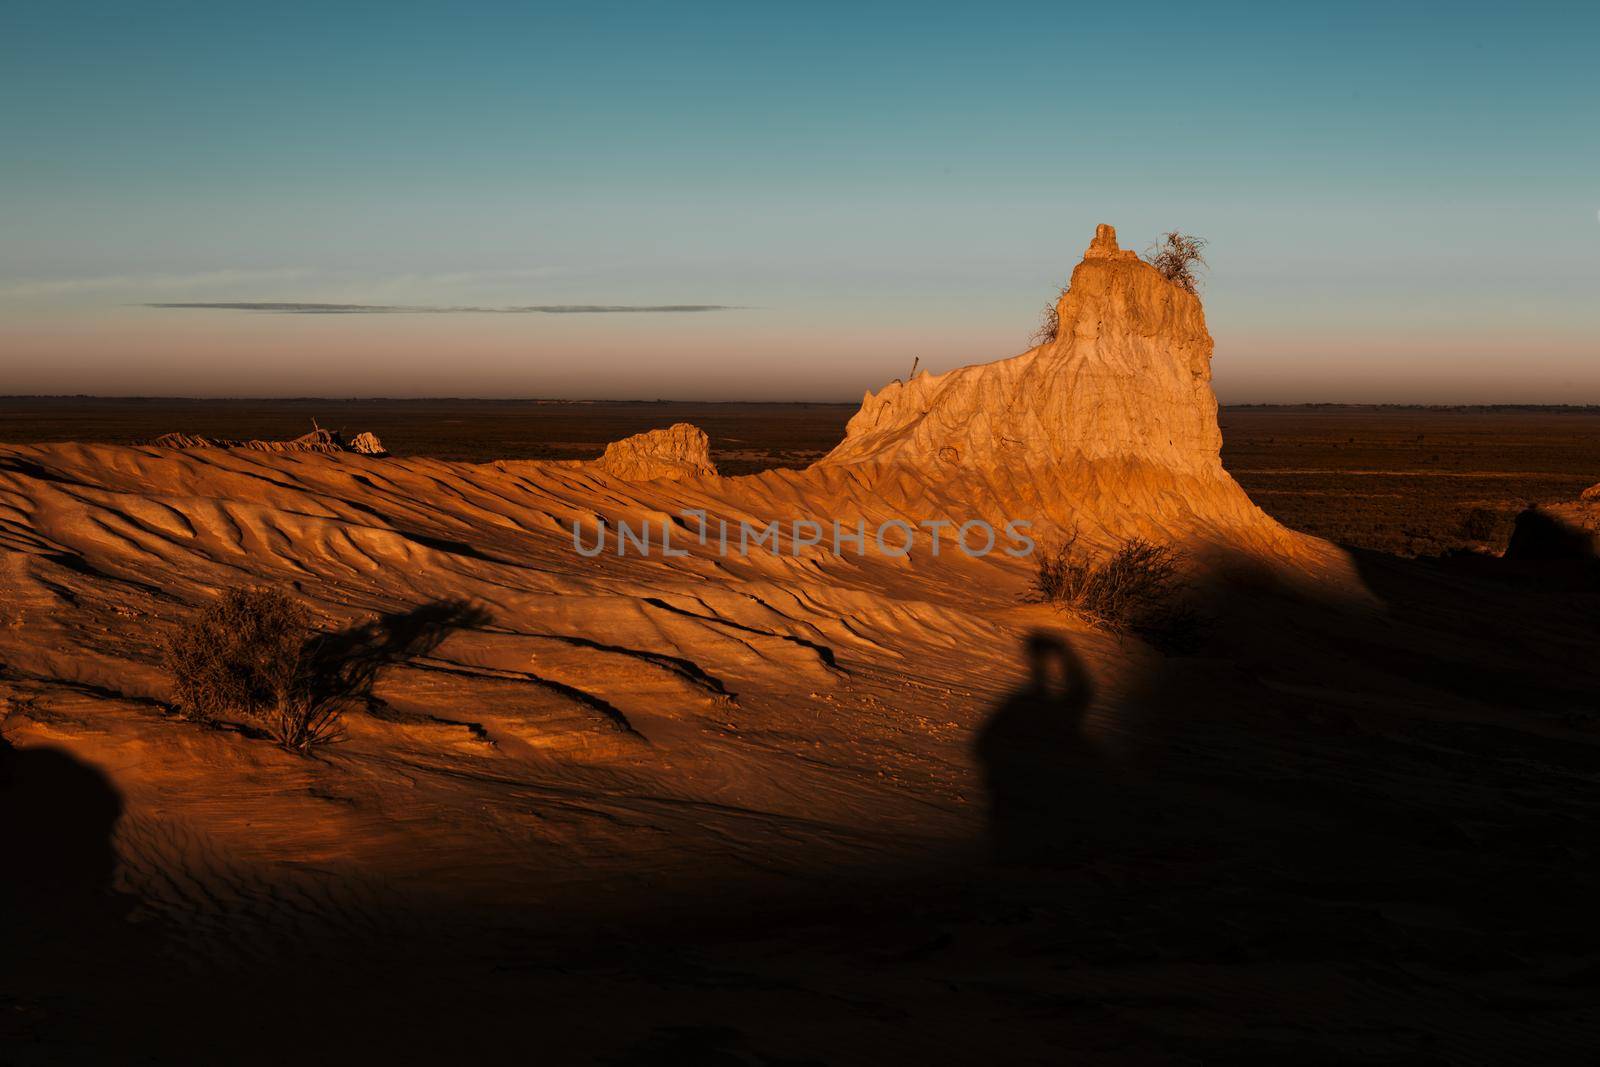 Beautful light and shadow across the desert landforms by lovleah